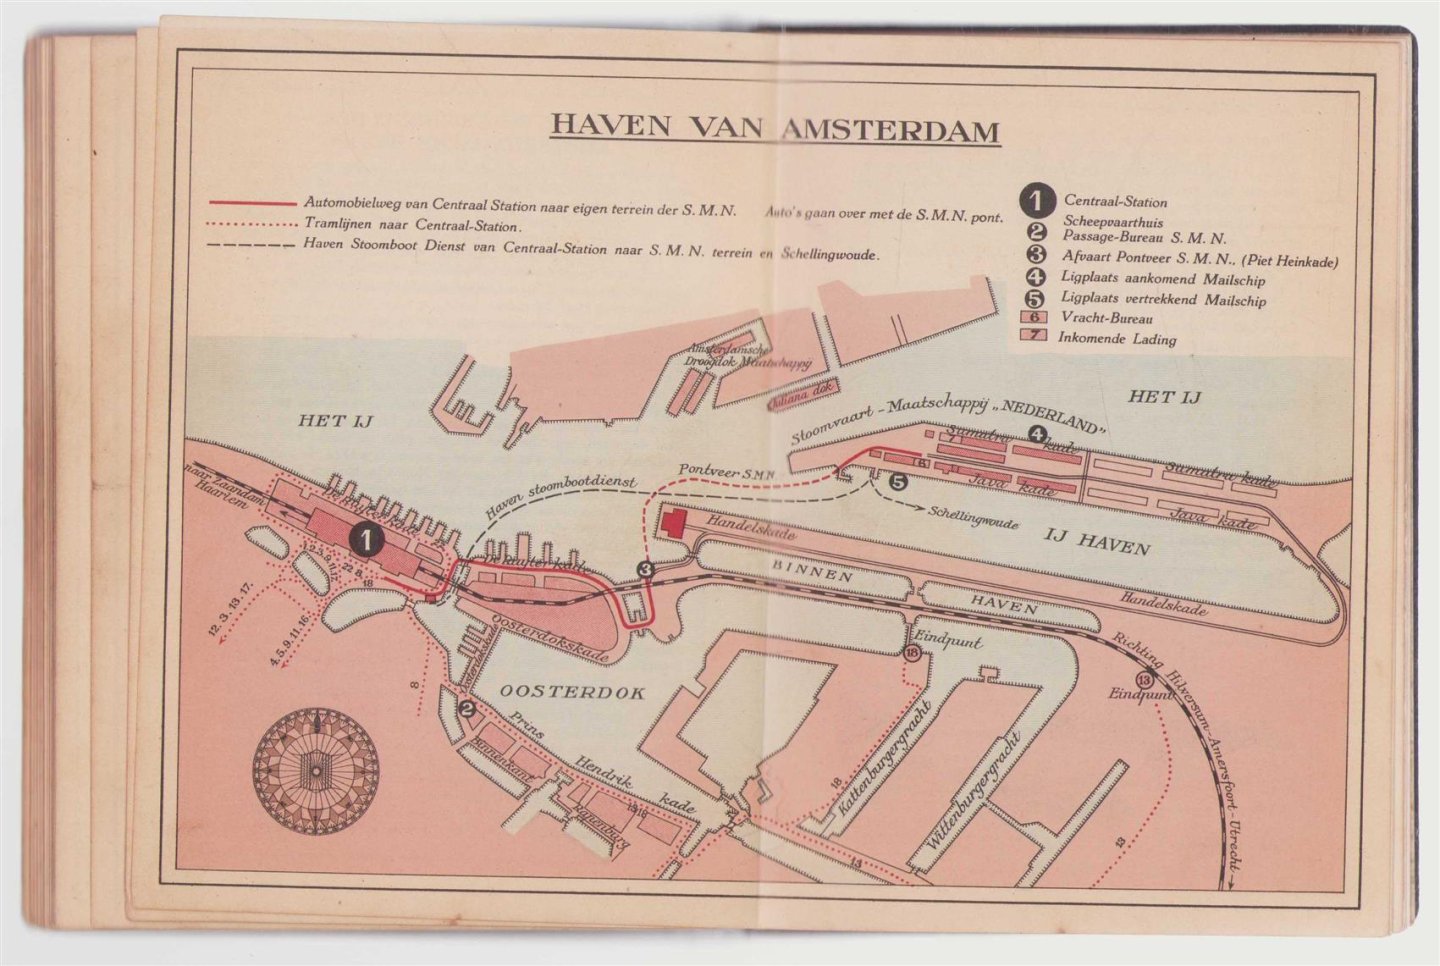 n.n - Reis-atlas der Stoomvaart Maatschappij Nederland (Amsterdam - Batavia)